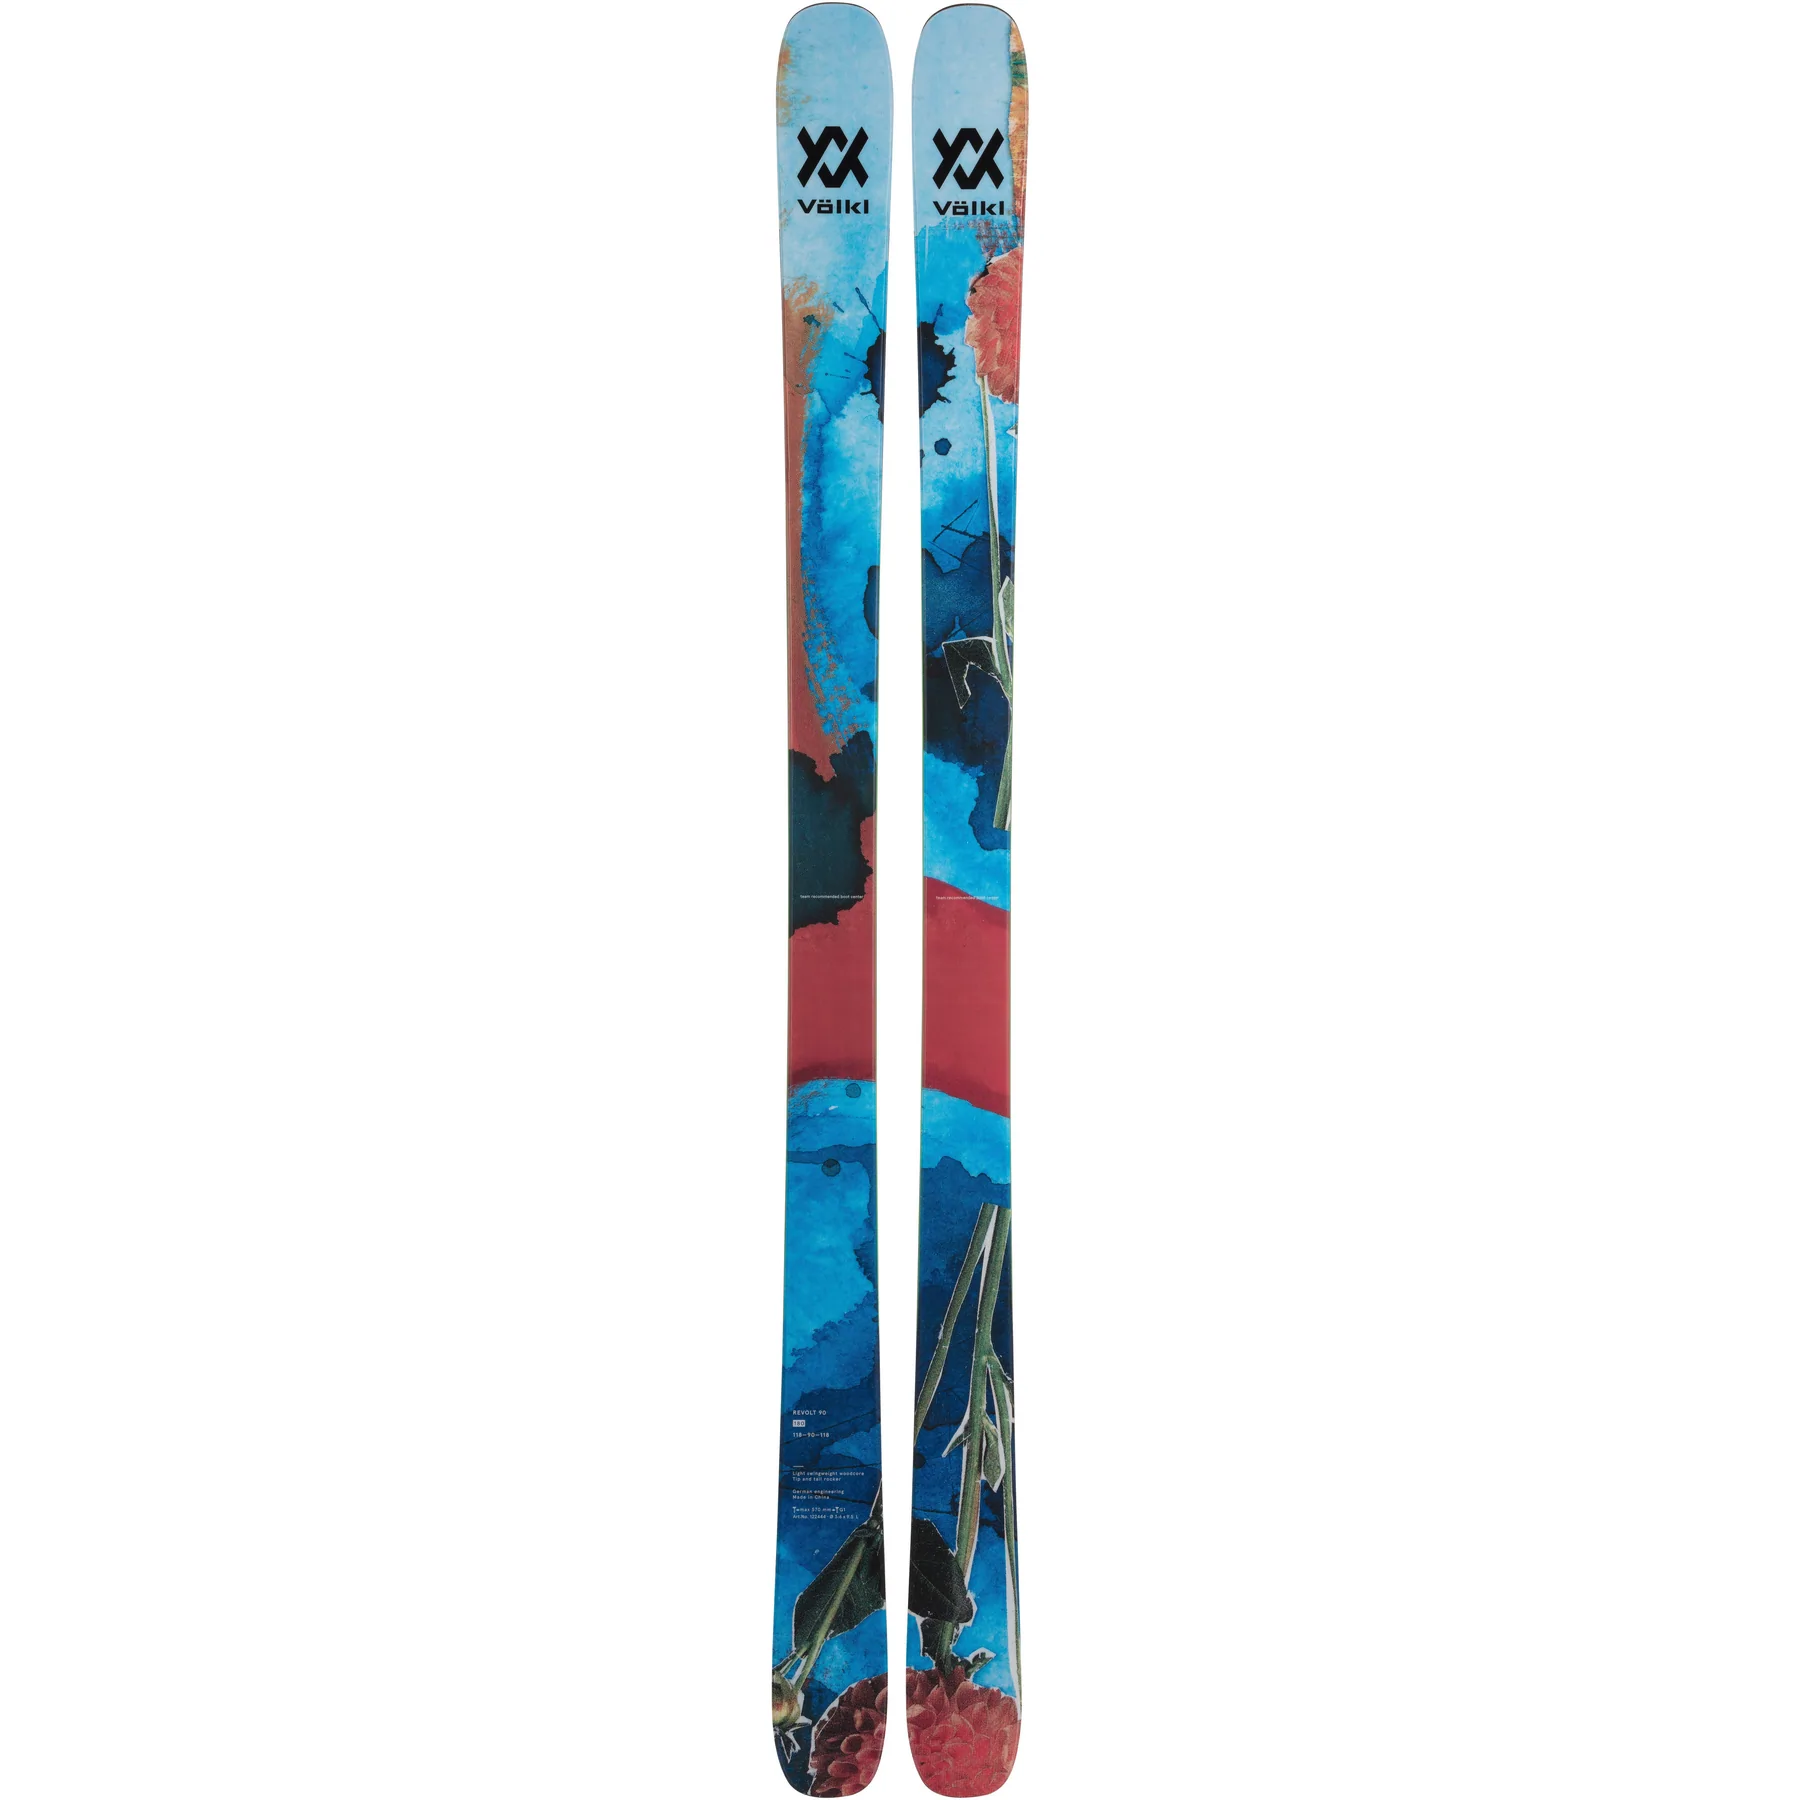 122444-Voelkl-ski-Revolt-90-front_1800x1800